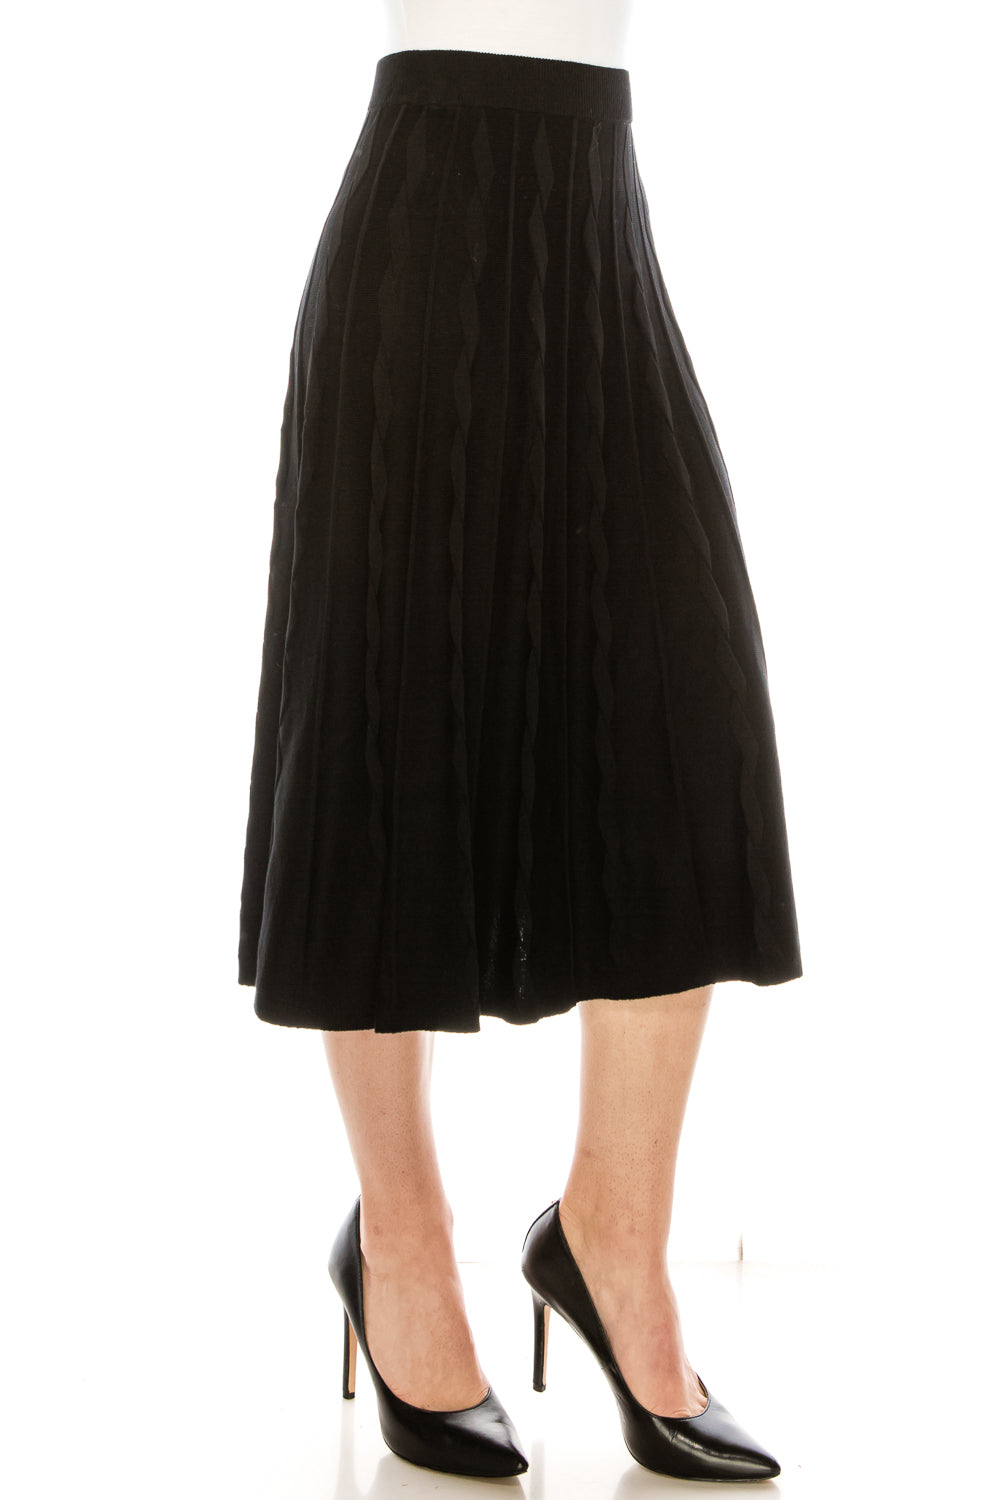 Black Solid Knit A-Line Skirt